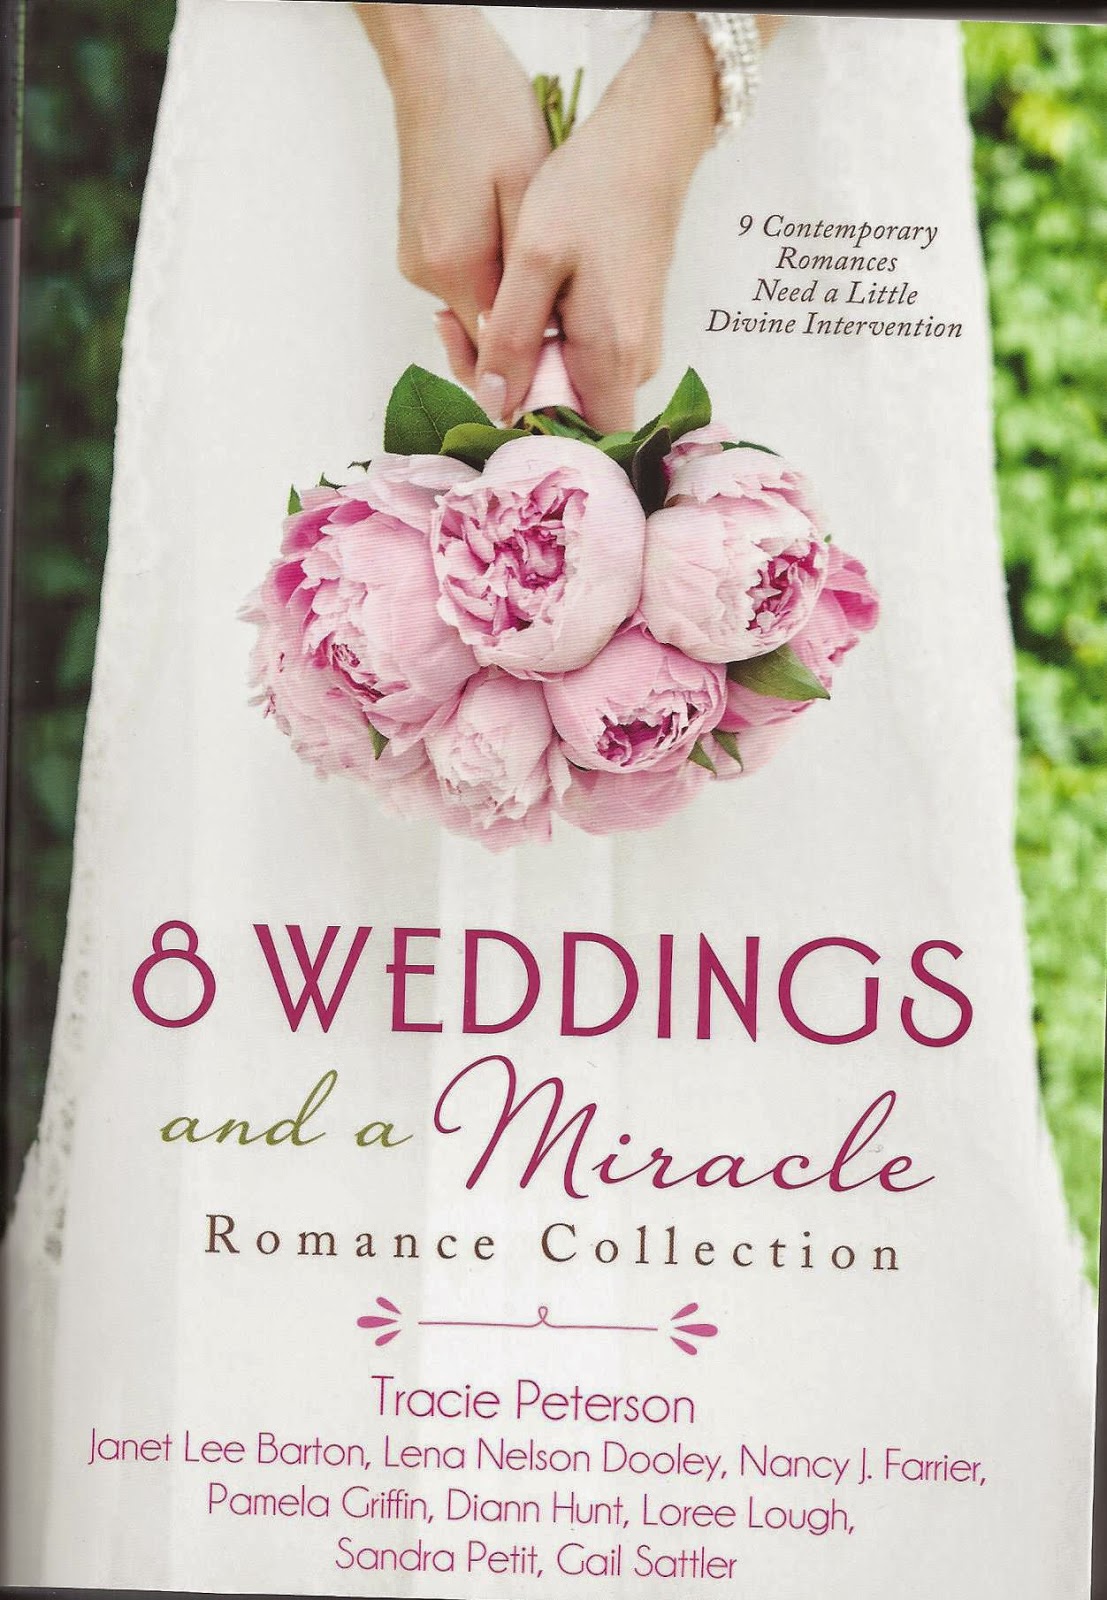 http://www.amazon.com/Weddings-Miracle-Romance-Collection-Contemporary-ebook/dp/B00TL5WZWQ/ref=tmm_kin_swatch_0?_encoding=UTF8&sr=&qid=